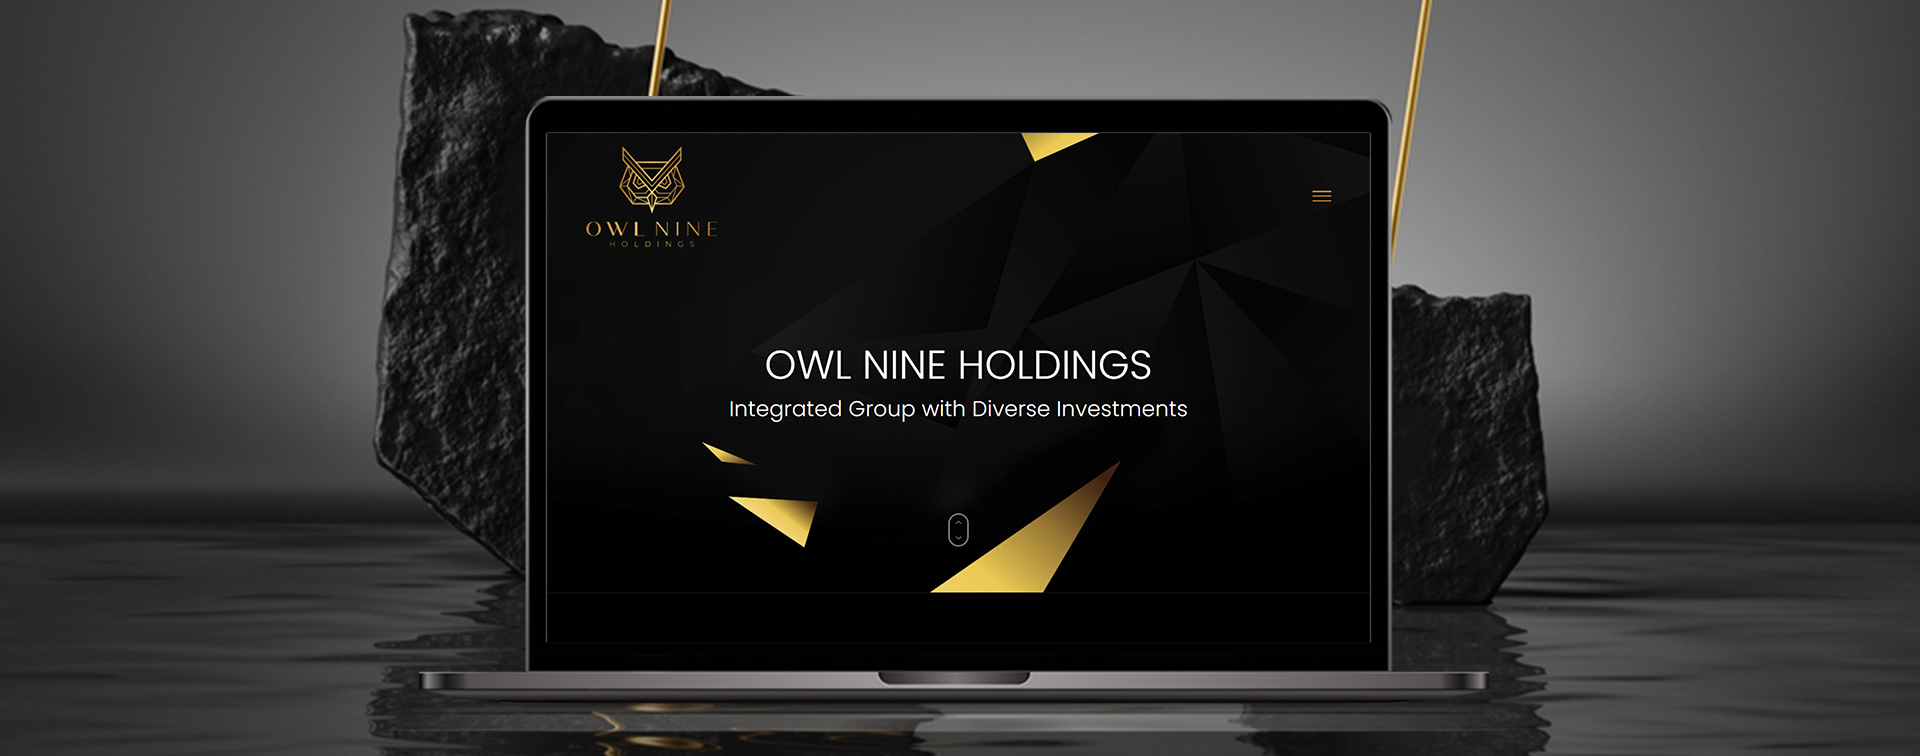 Owl Nine Holdings